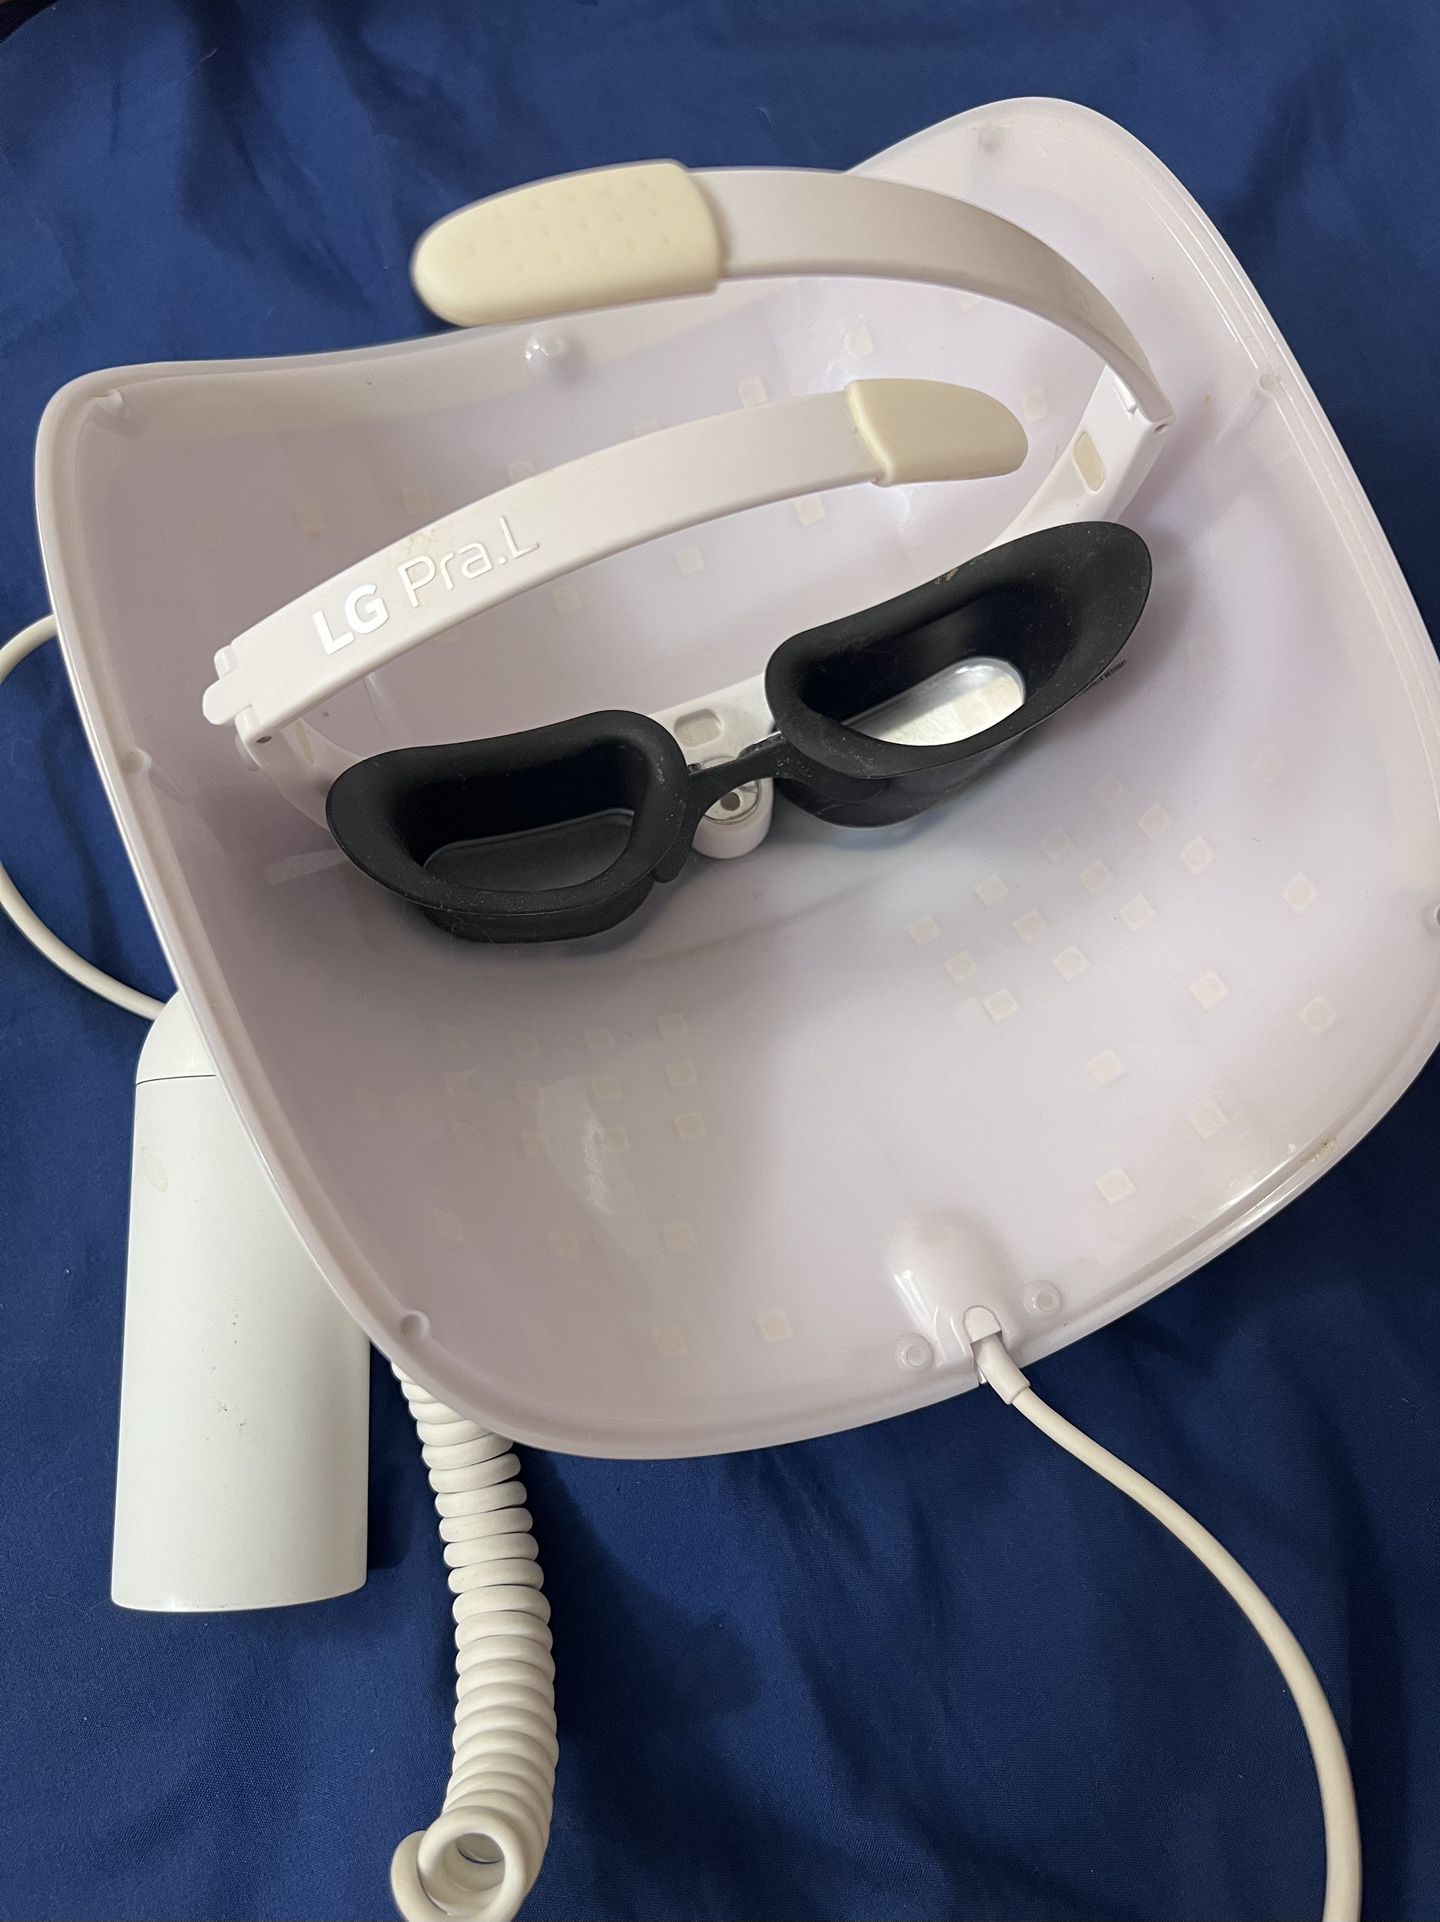 LG Pra L Mask, Led Therapy Face Mask, Home Skin Care